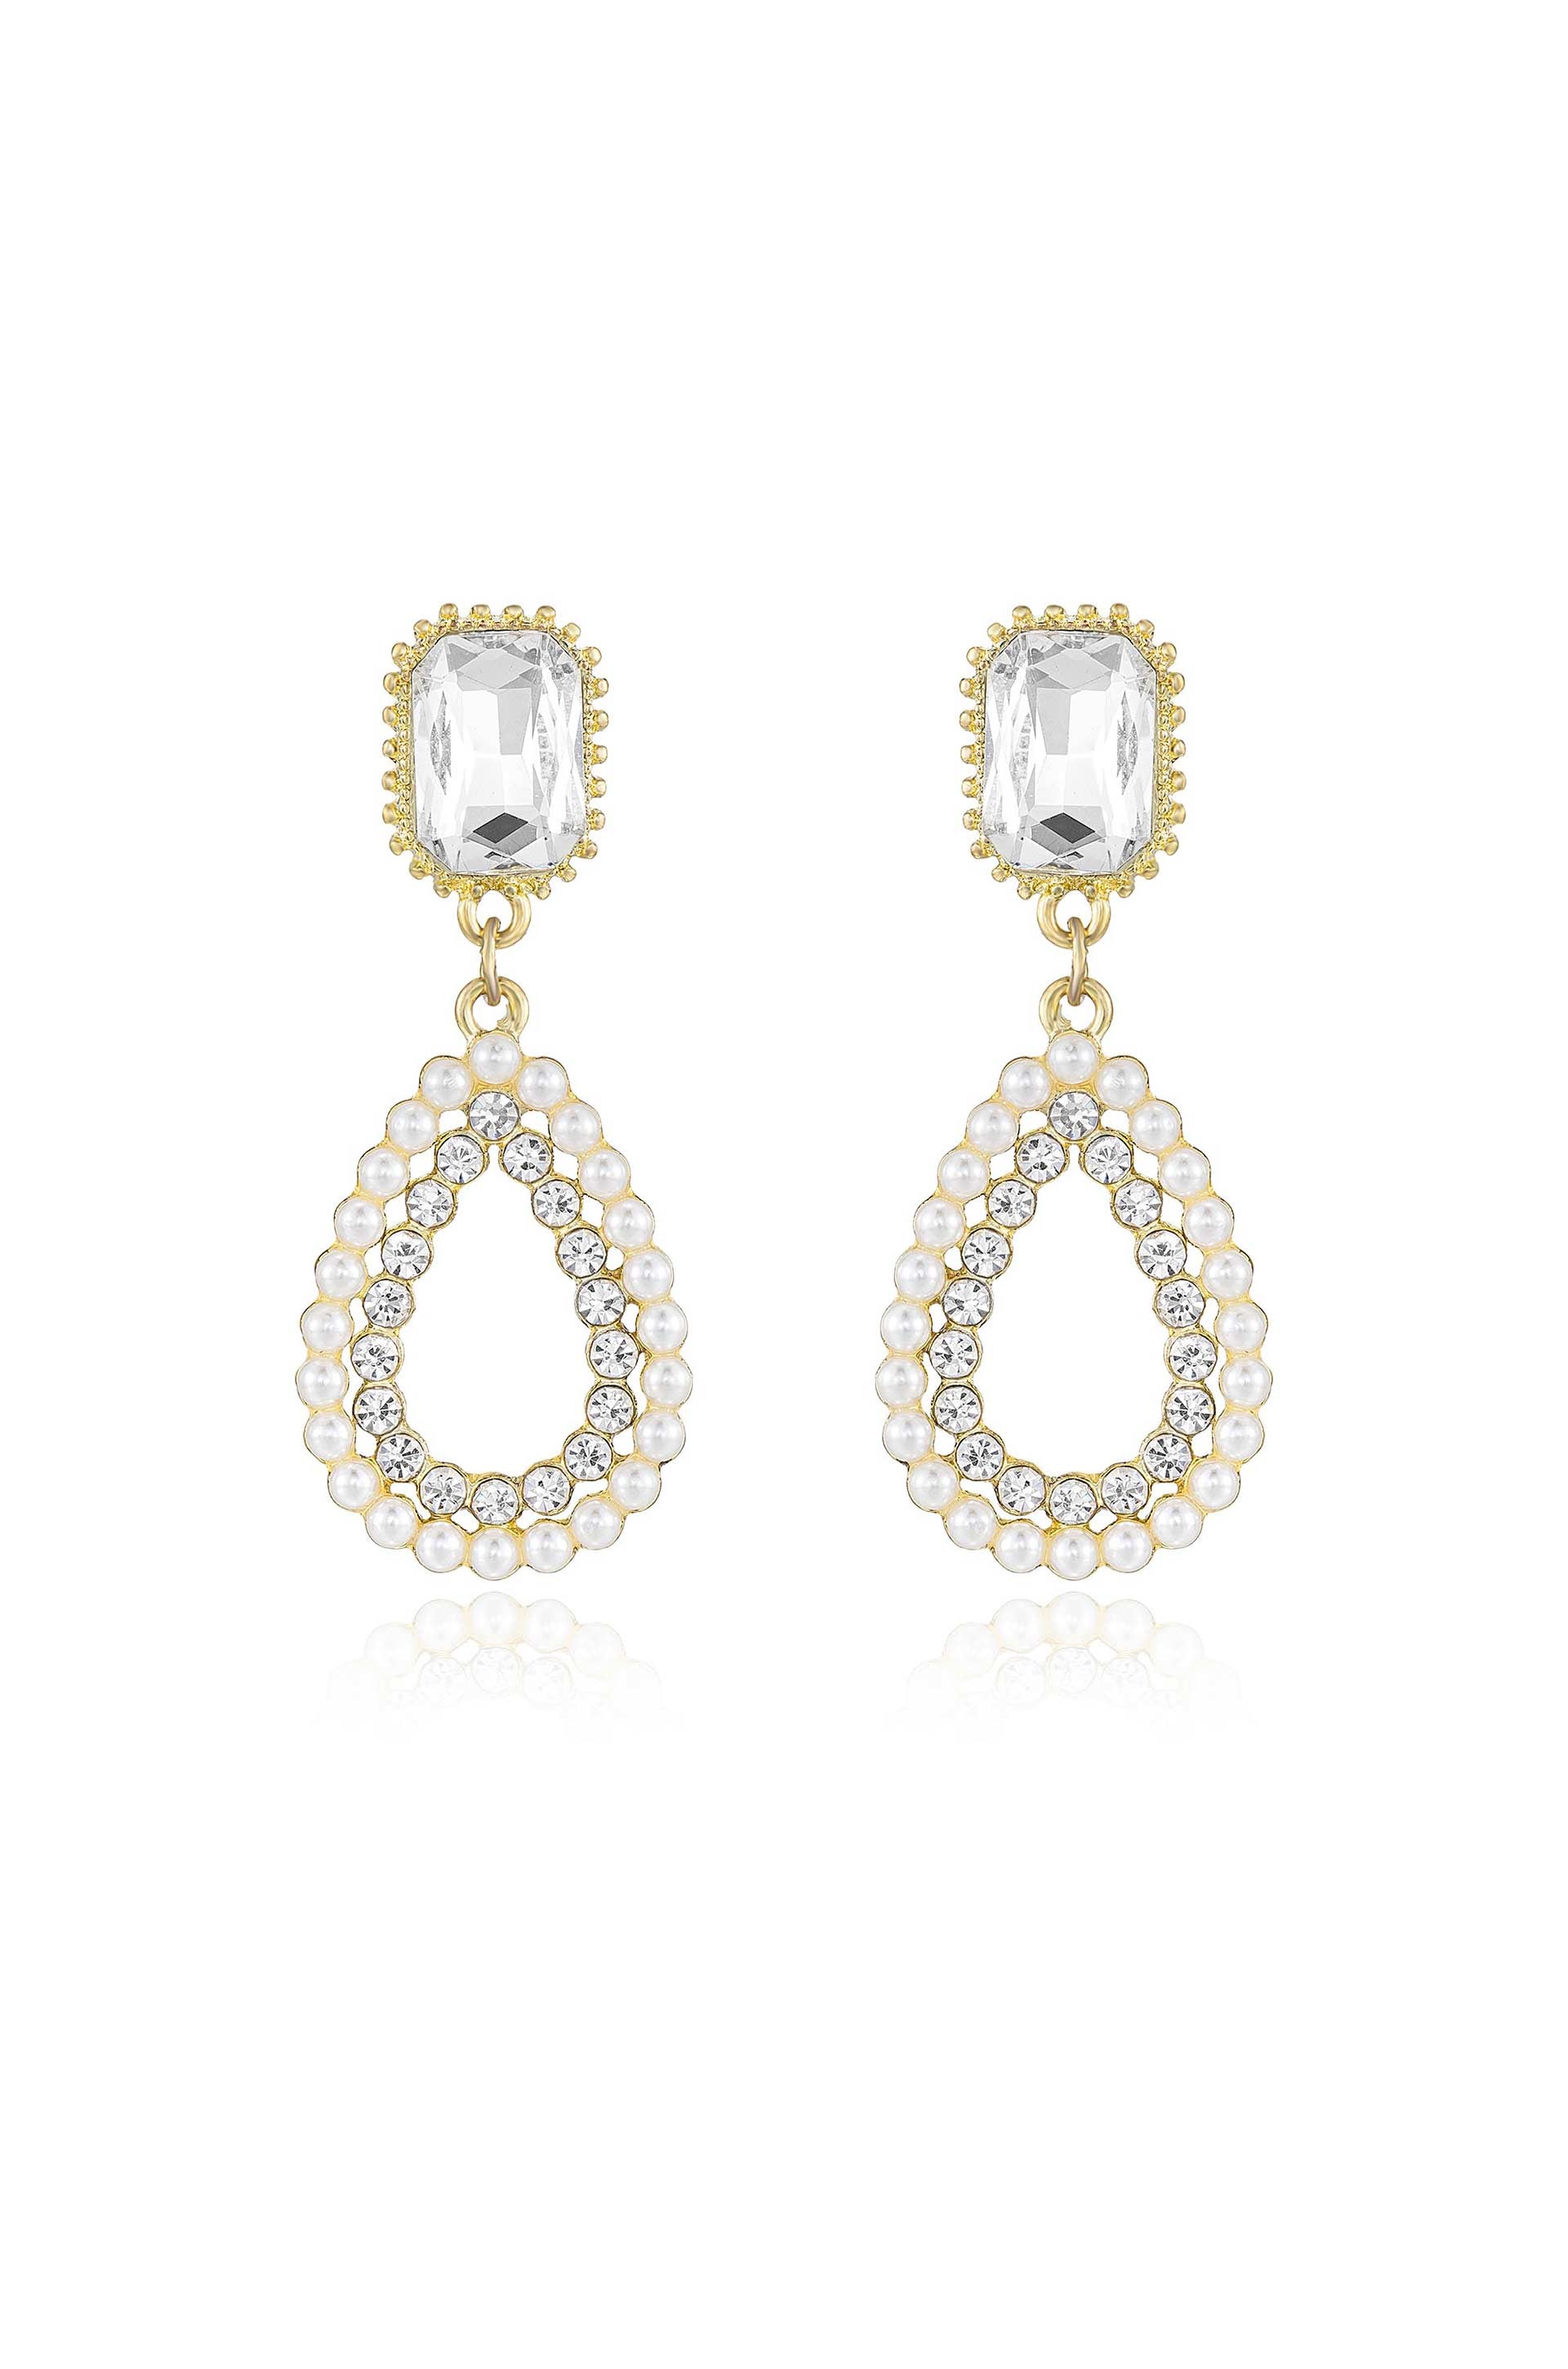 Bridal Luxe Earrings - Premium Earrings from Ettika - Just $45! Shop now at Tooksie